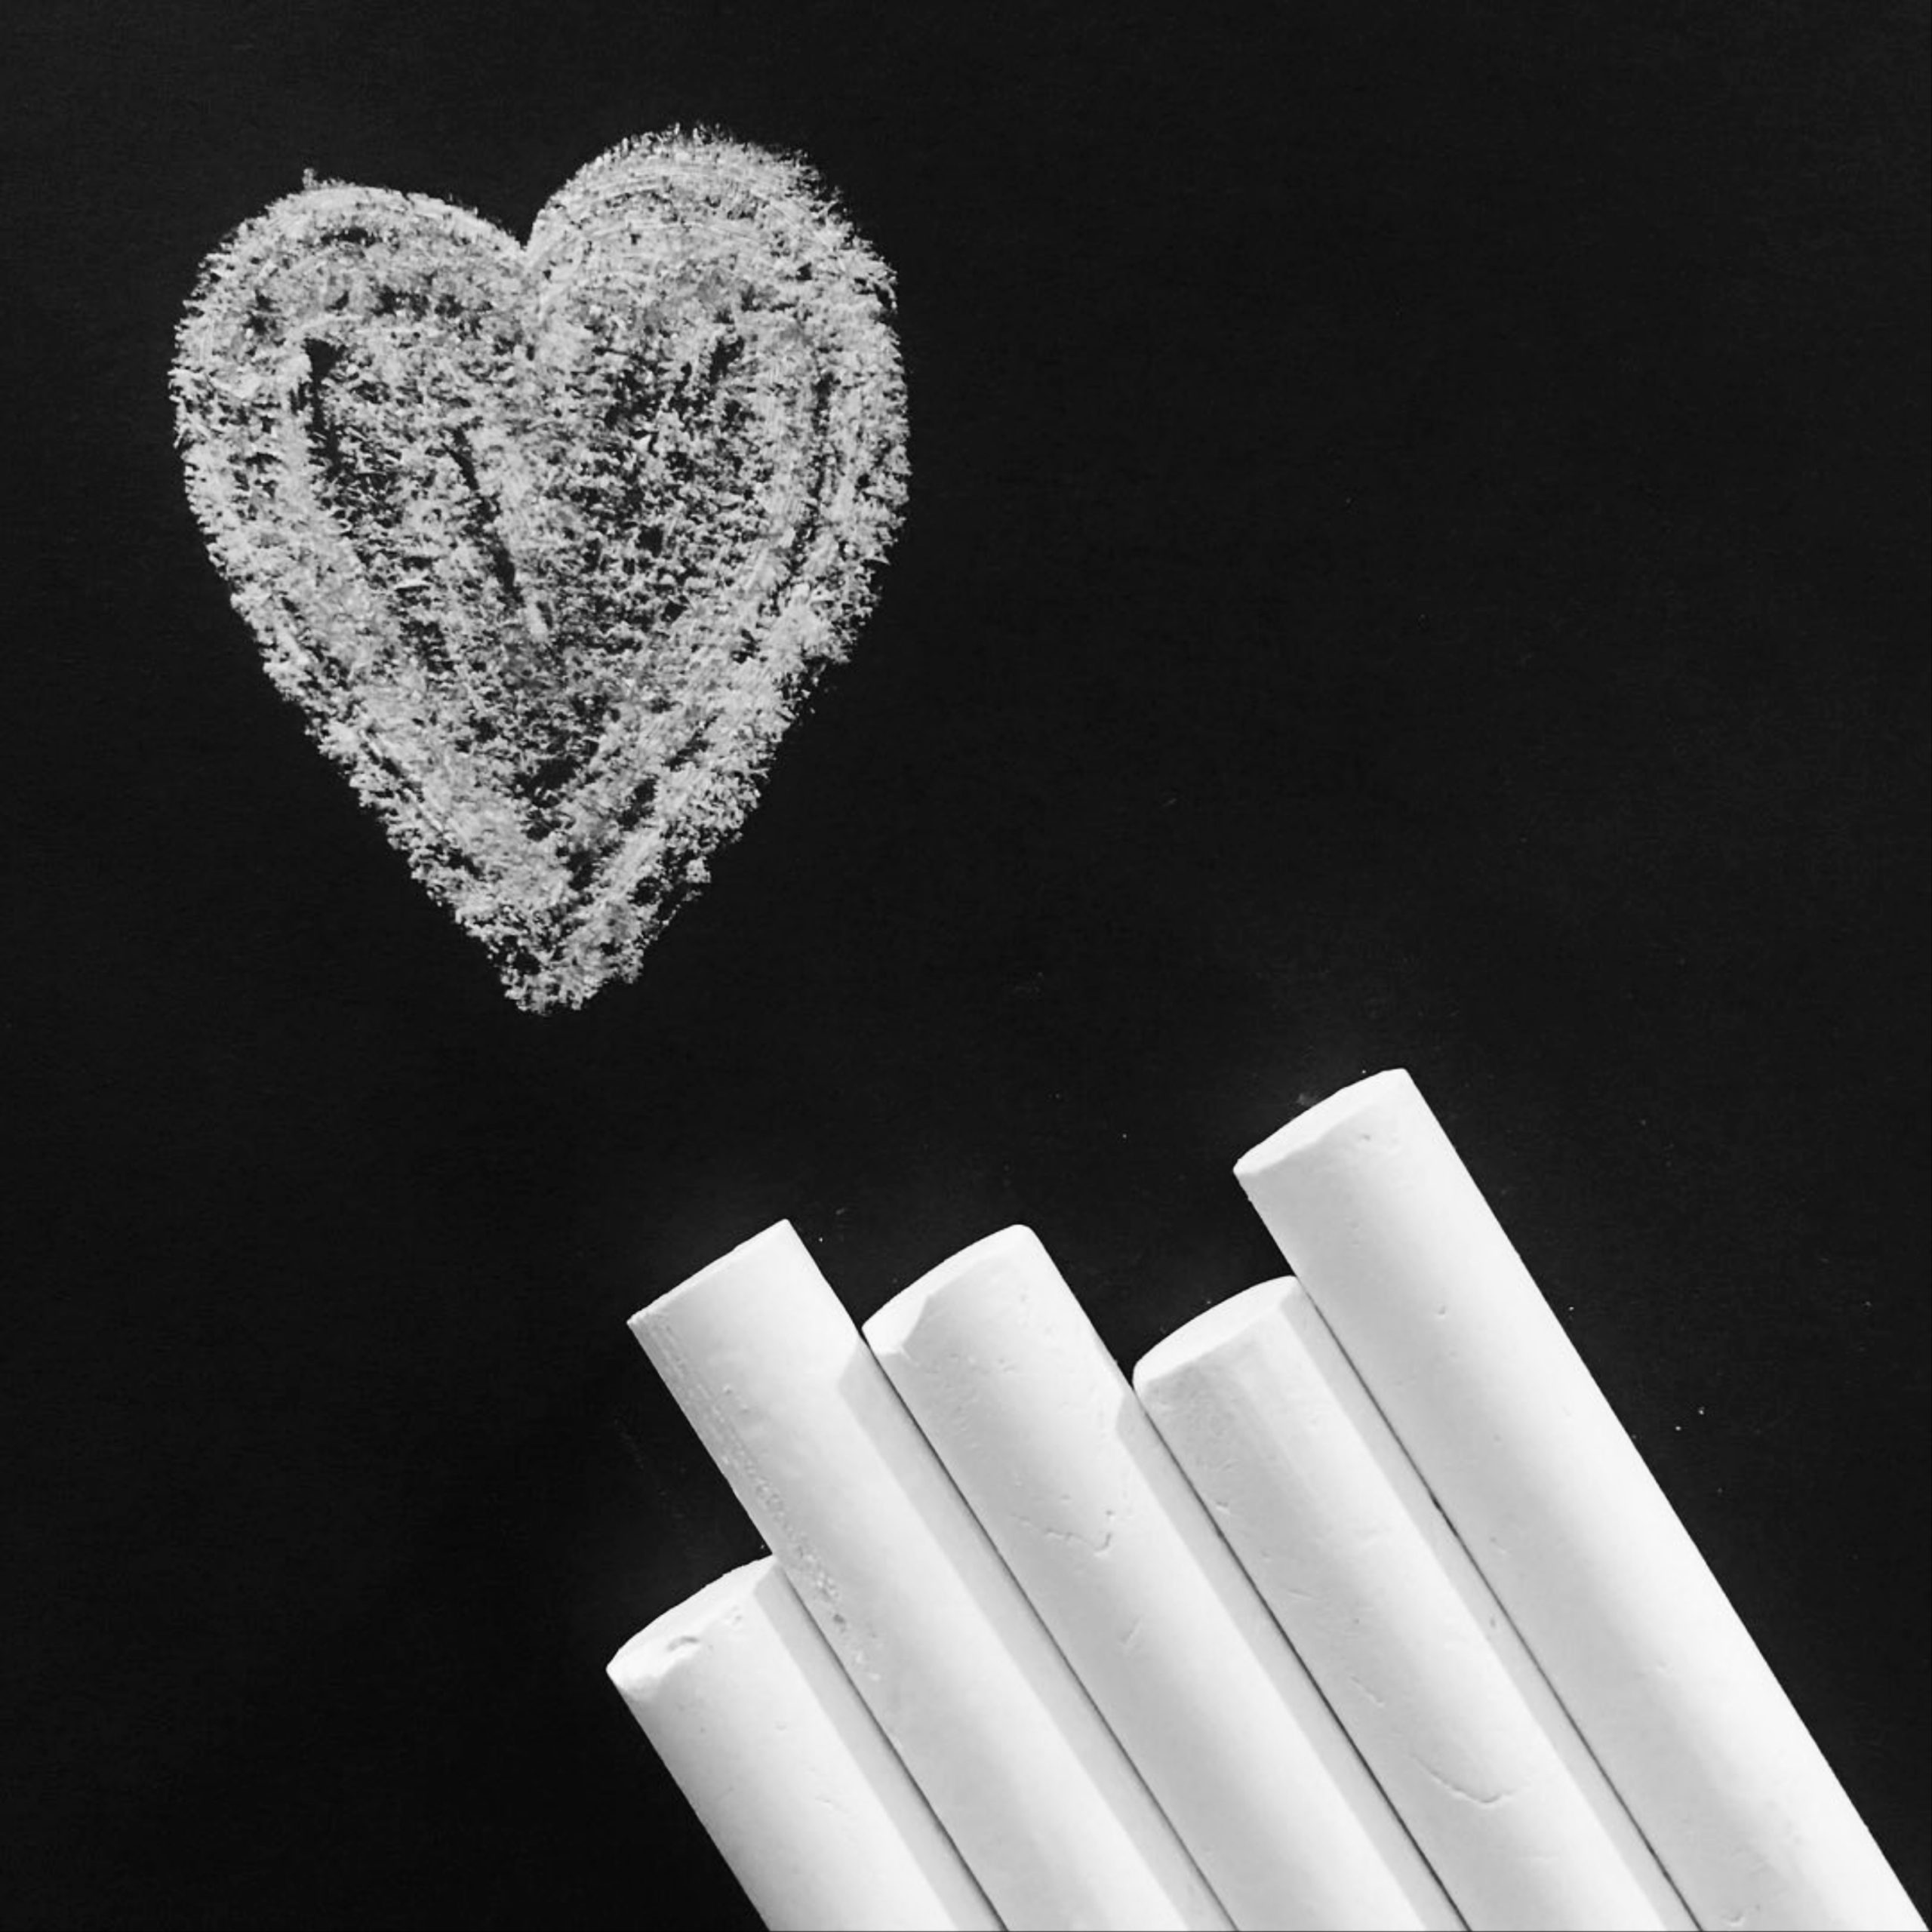 A heart shape and white chalks